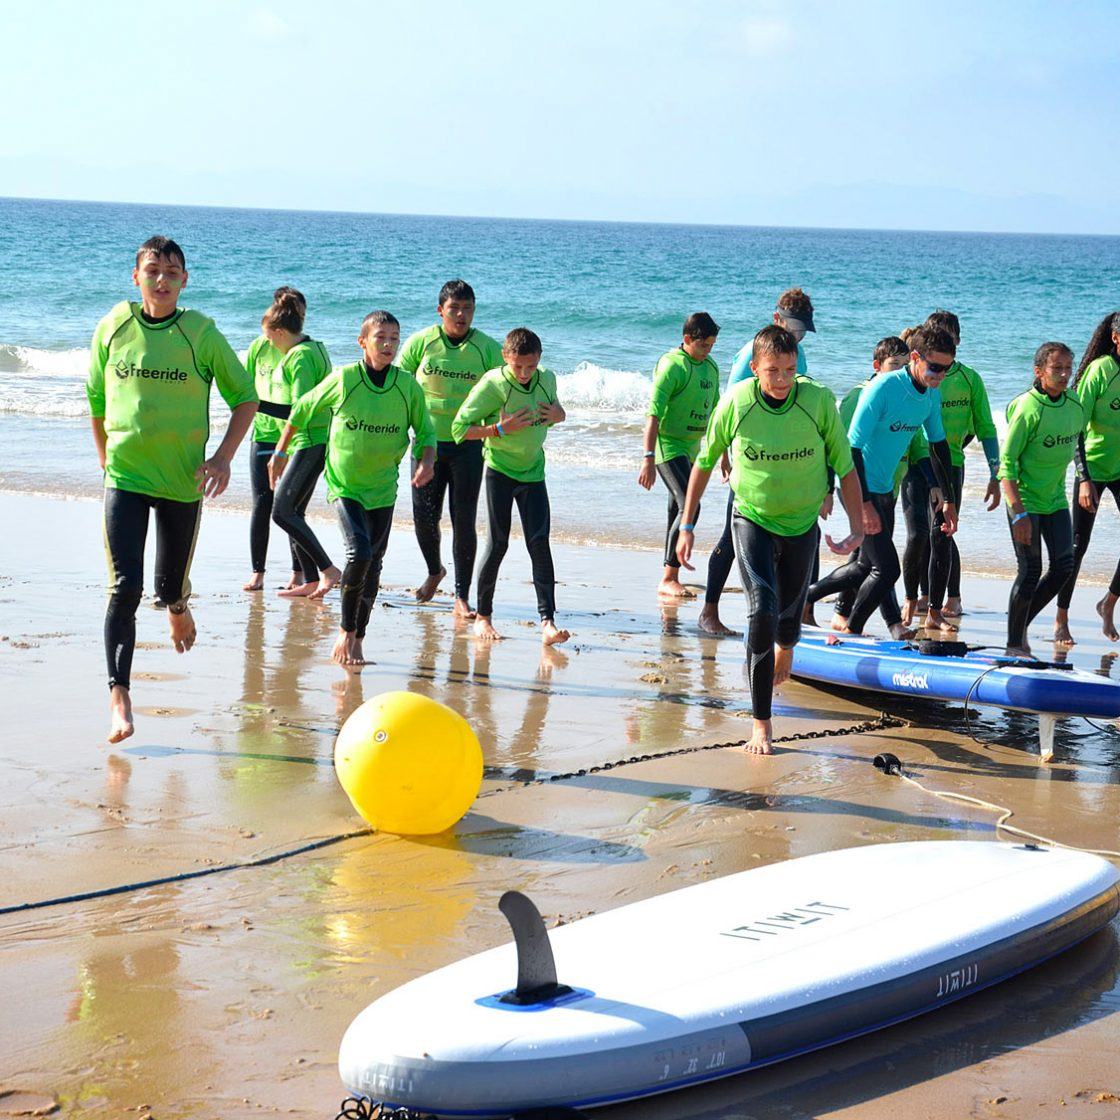 Stand Up Paddle Board In Tarifa Spain, Valdevaqueros Beach,Freeride Tarifa Kitesurf School